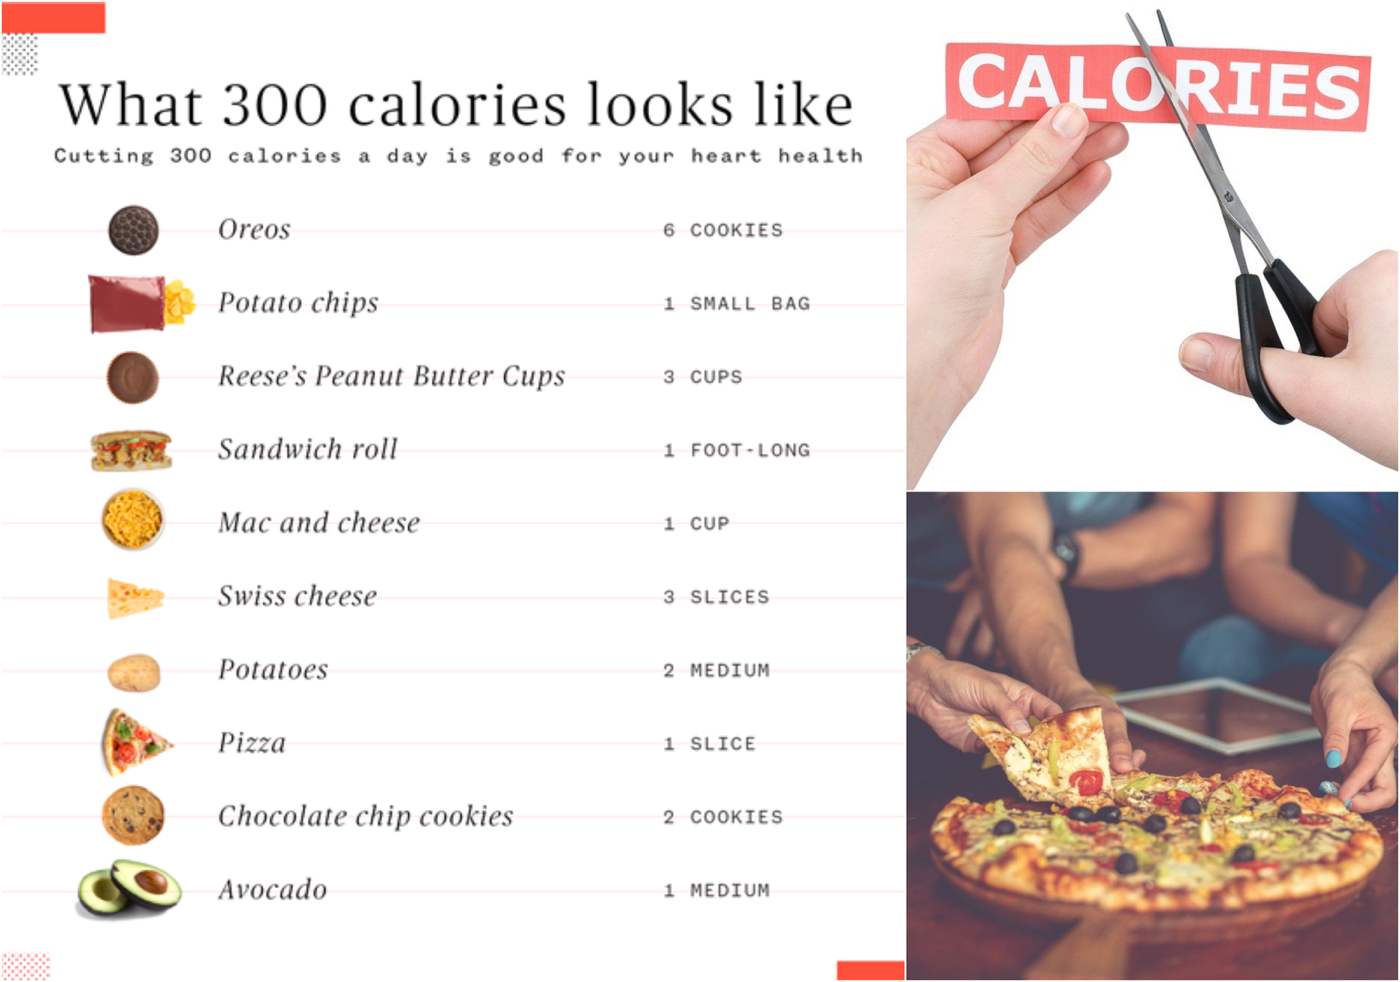 kalorienreduzierte Ernährung Diät so sehen 300 kalorien aus